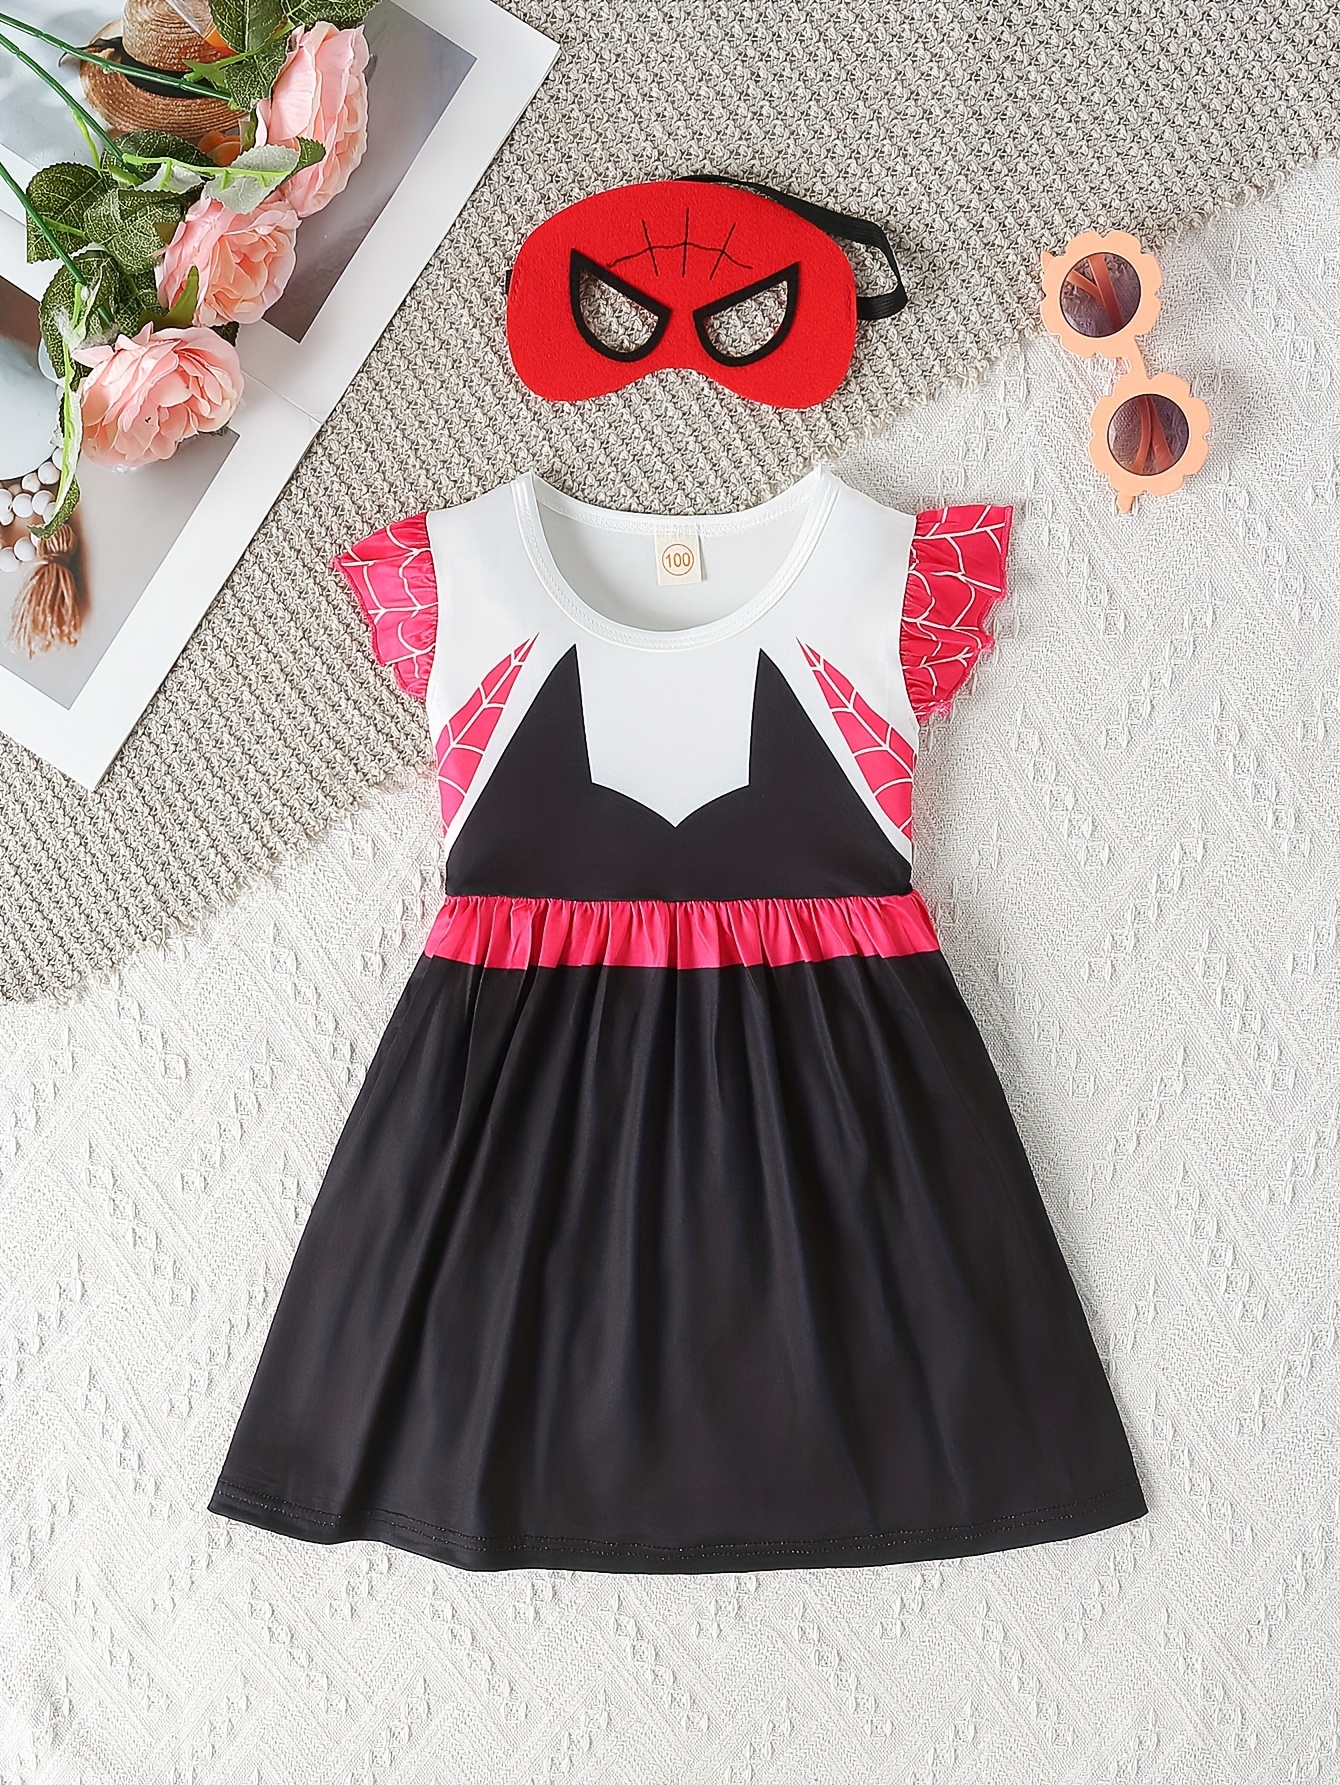 Spider Girl Costume, Spider Birthday Dress, Party Gown, Mini Tutu